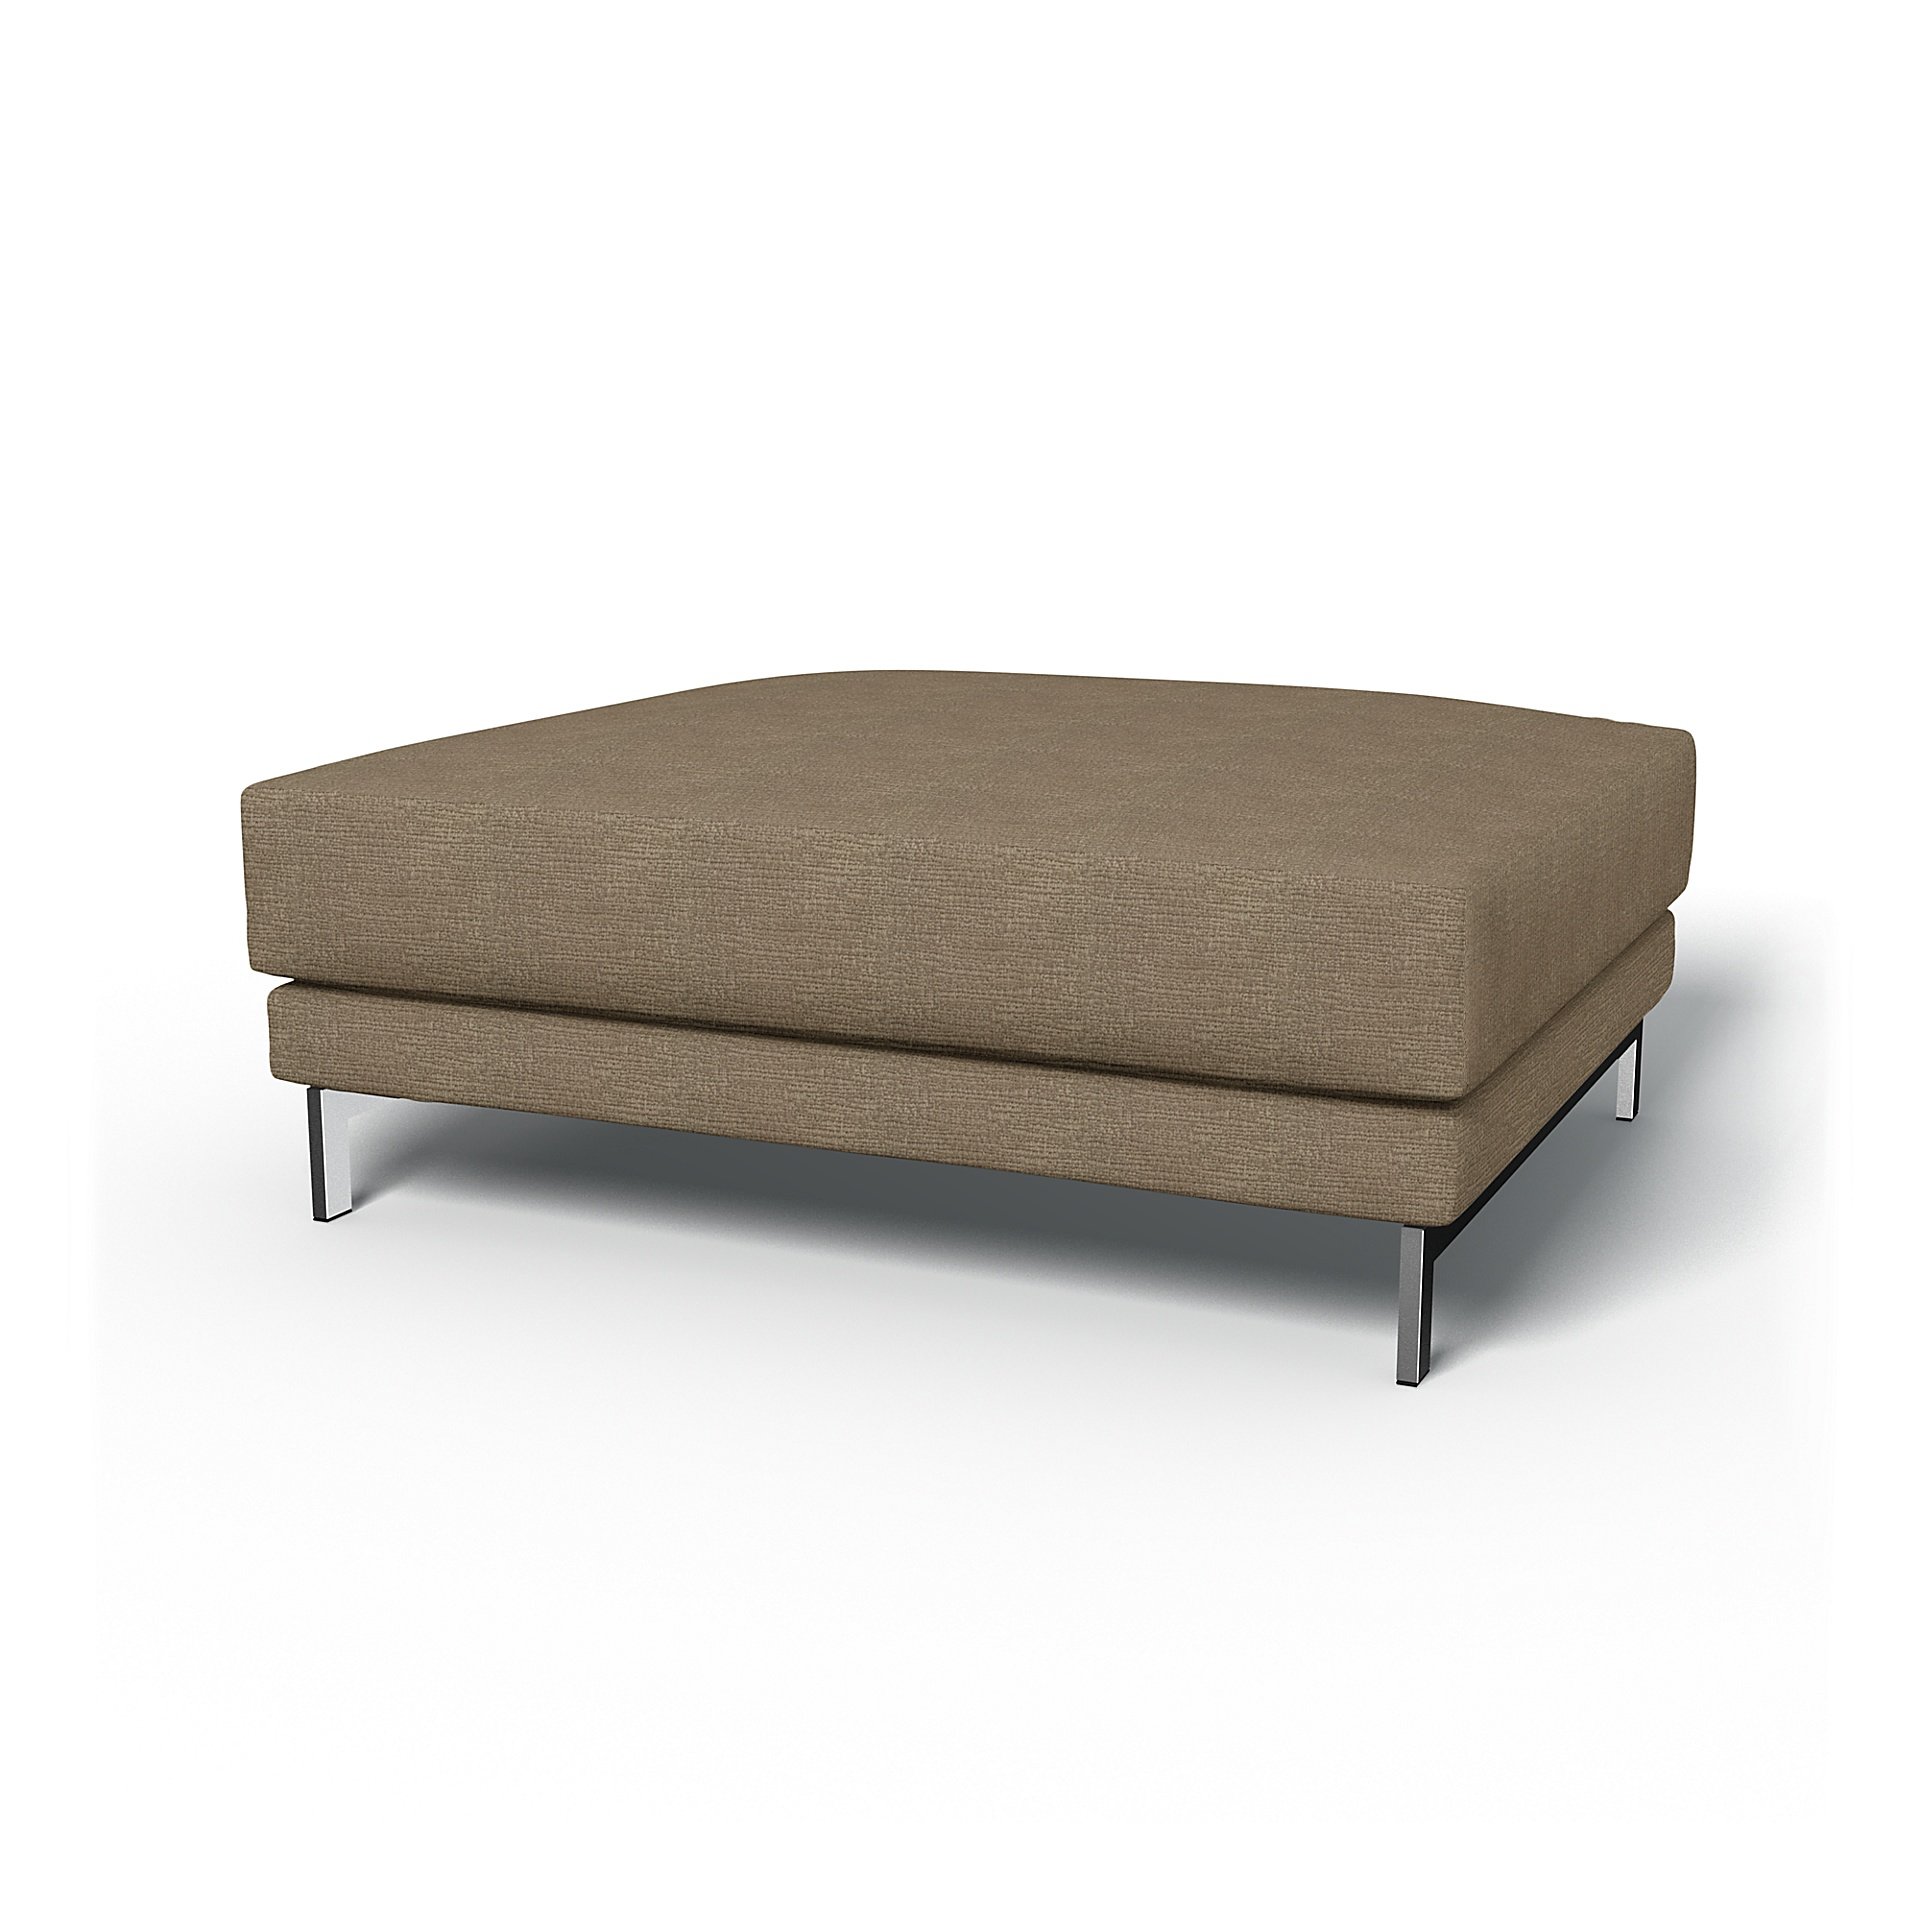 IKEA - Nockeby Footstool Cover, Camel, Boucle & Texture - Bemz